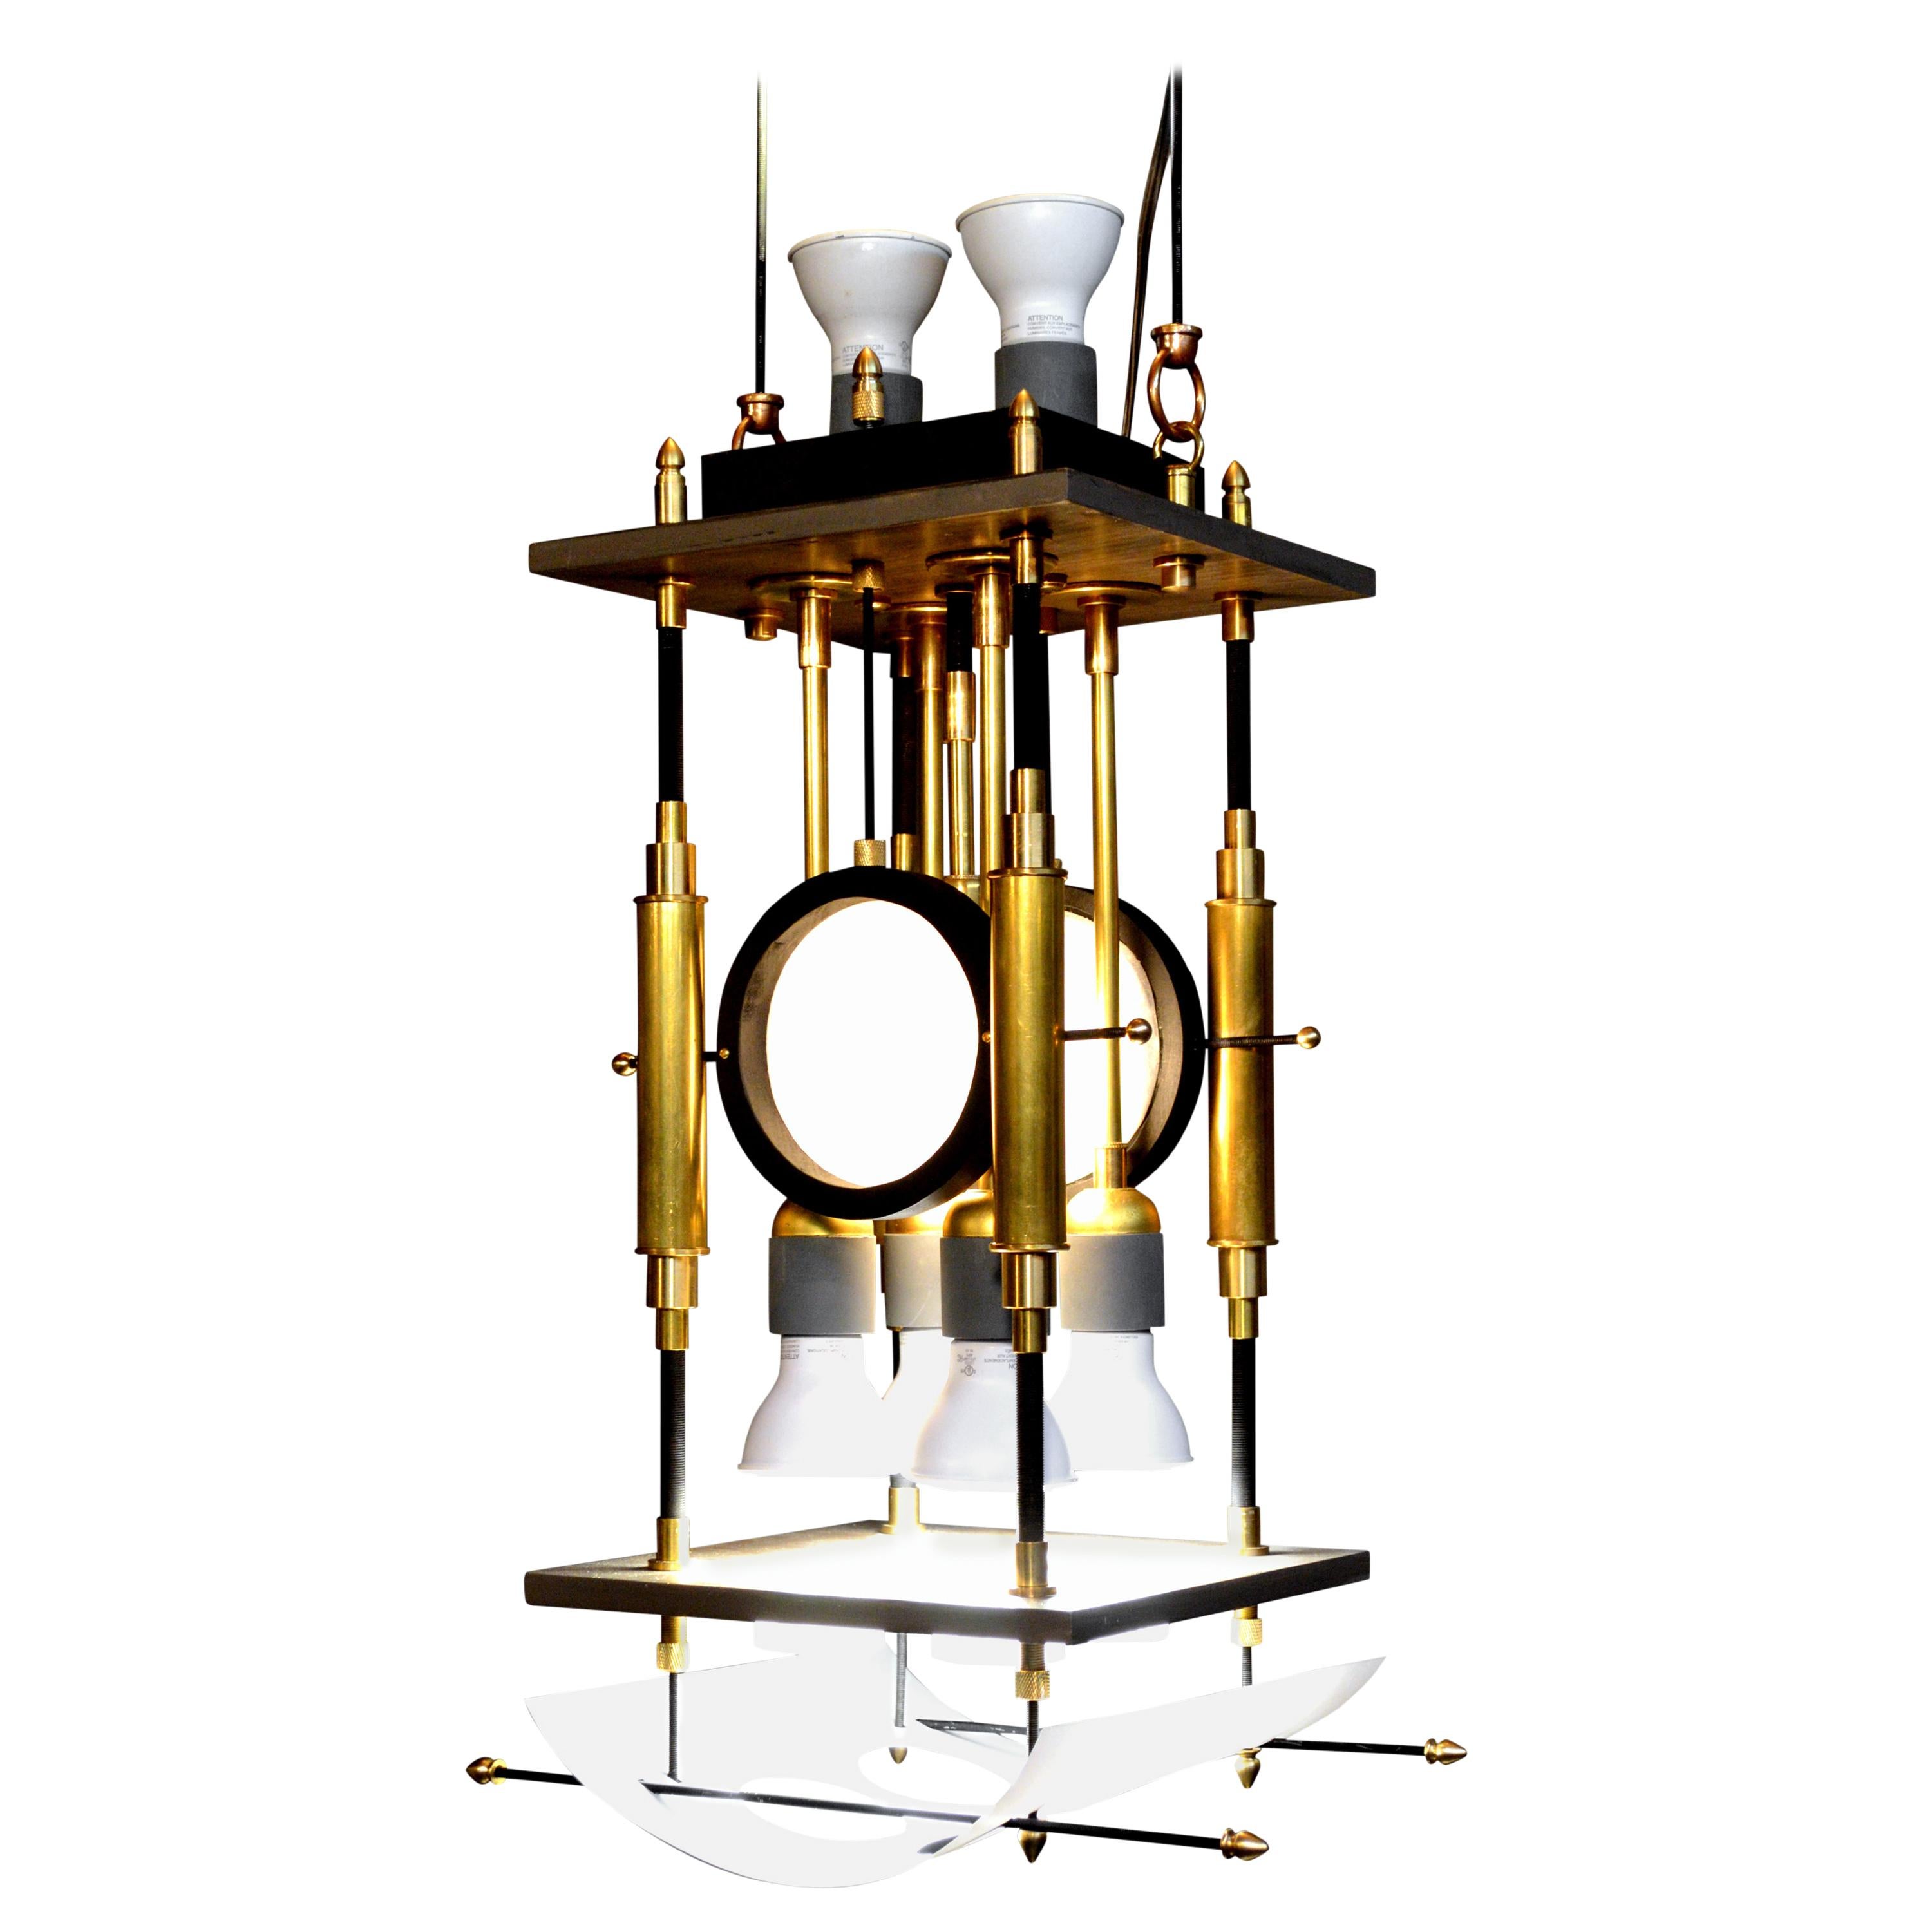 Art Donovan, "Liturgical Pendant Lamp" For Sale